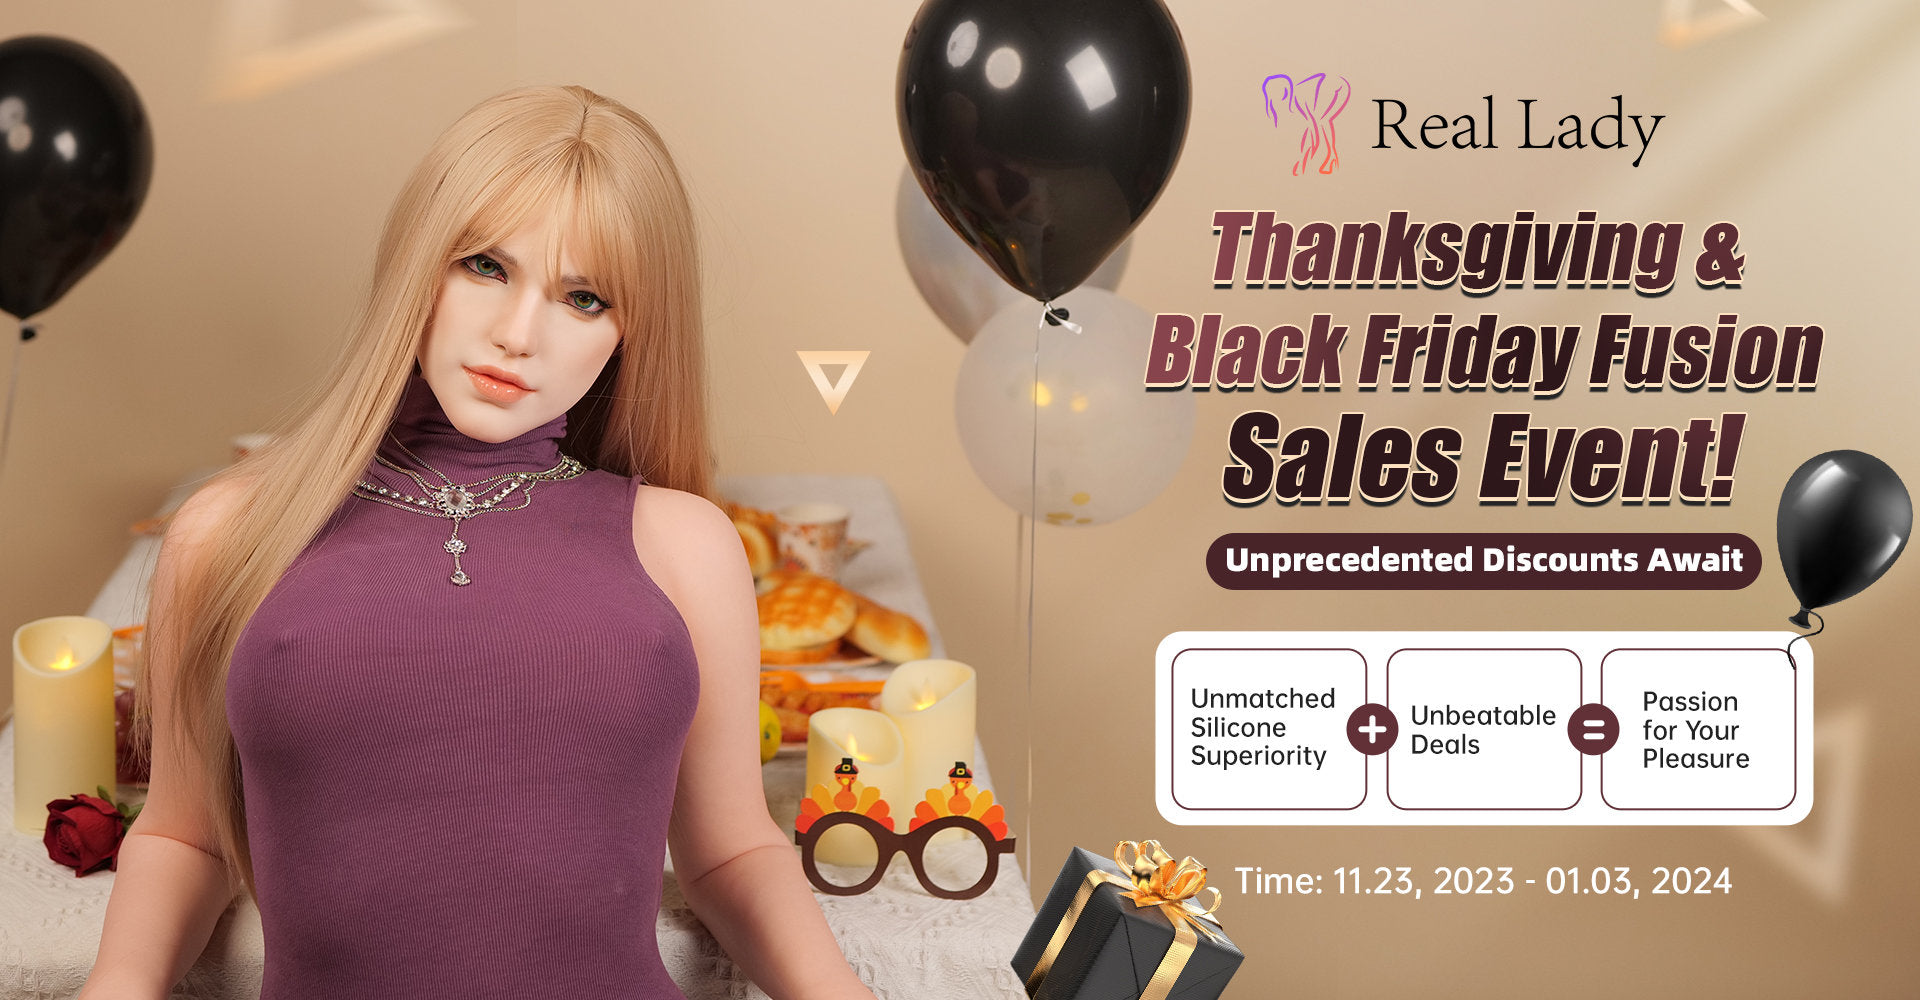 RealLady Black Friday Thanks Giving Promotion Desktop Banner